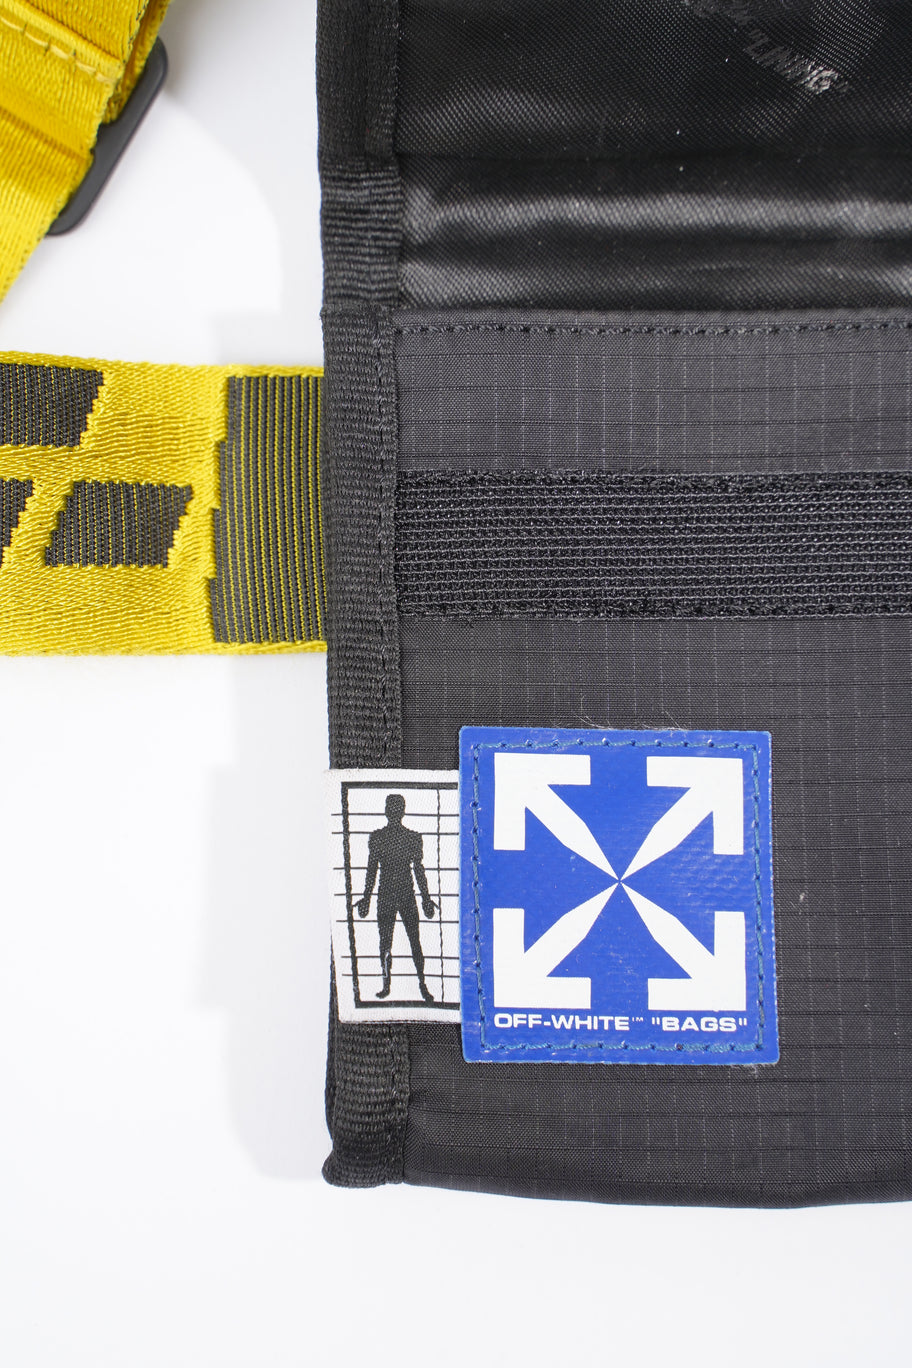 Two Pocket Belt Yellow / Black Fabric Image 9